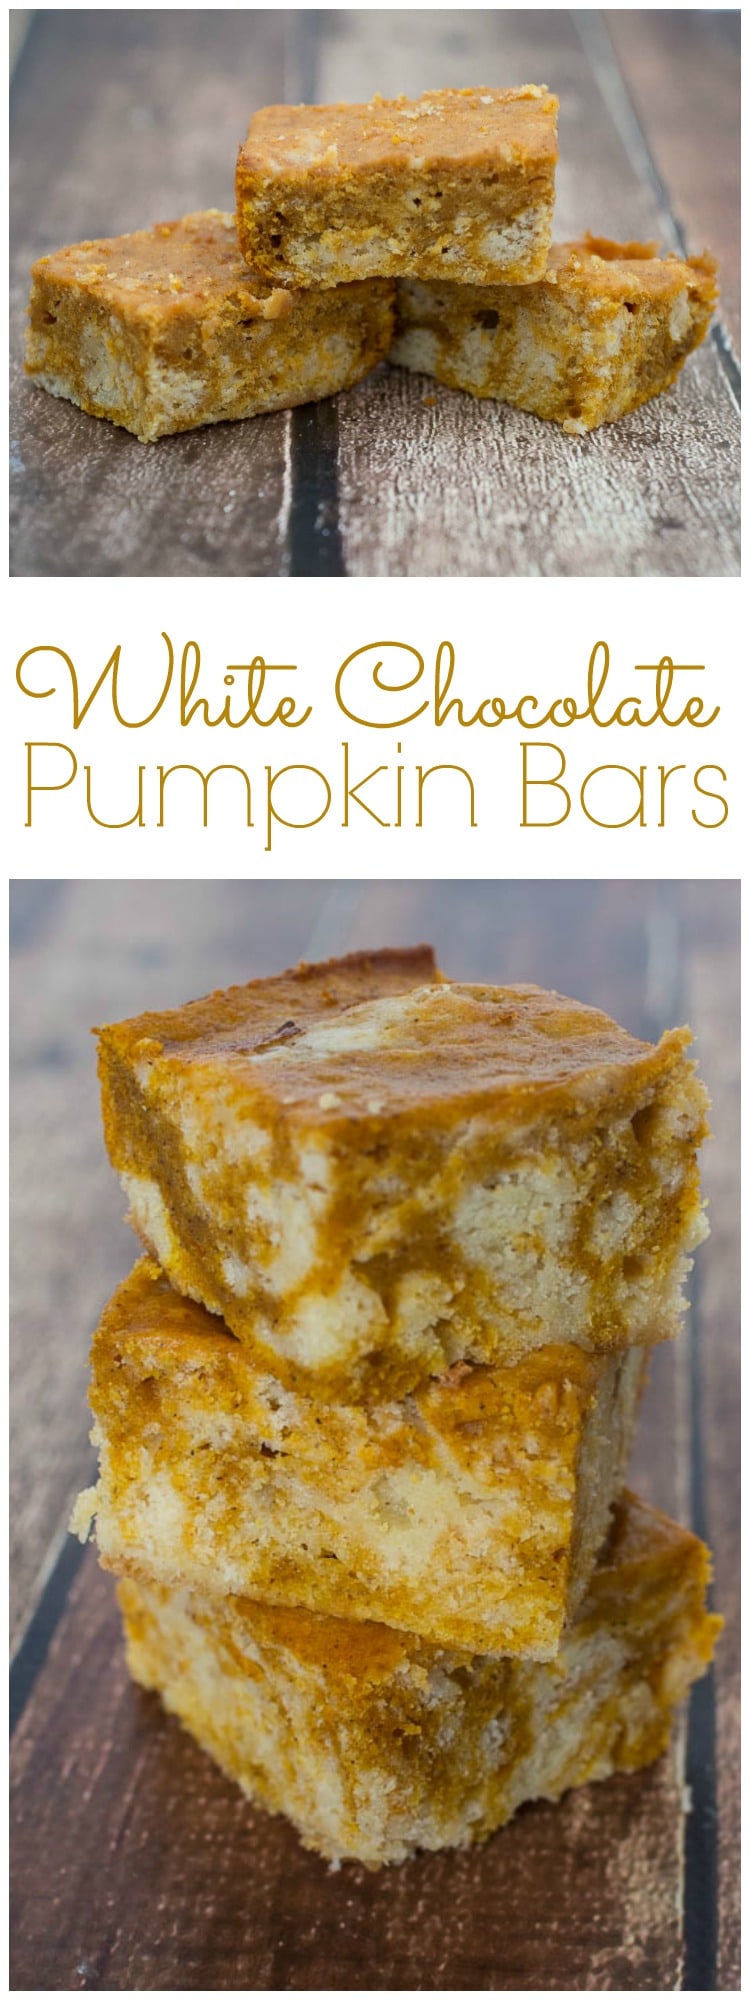 White Chocolate Pumpkin Bars | Pumpkin Treats | Easy Recipe for Pumpkin Bars | Chocolate Pumpkin Bars